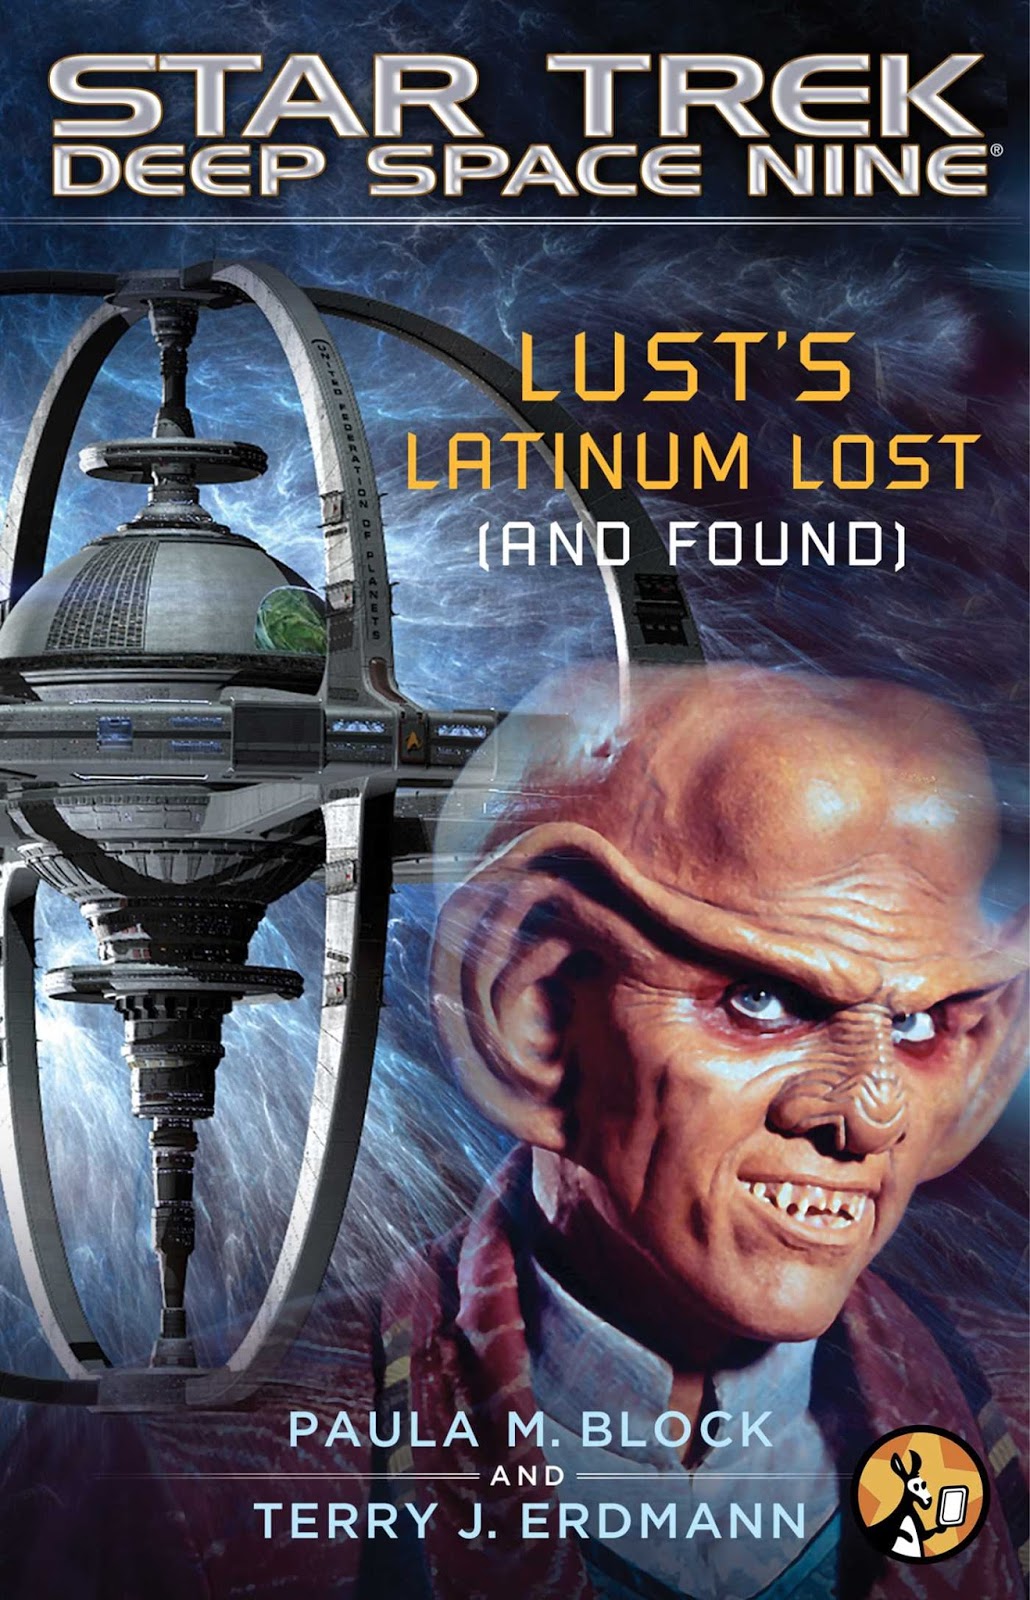 “Star Trek: Deep Space Nine: Lust’s Latinum Lost” Review by Tor.com